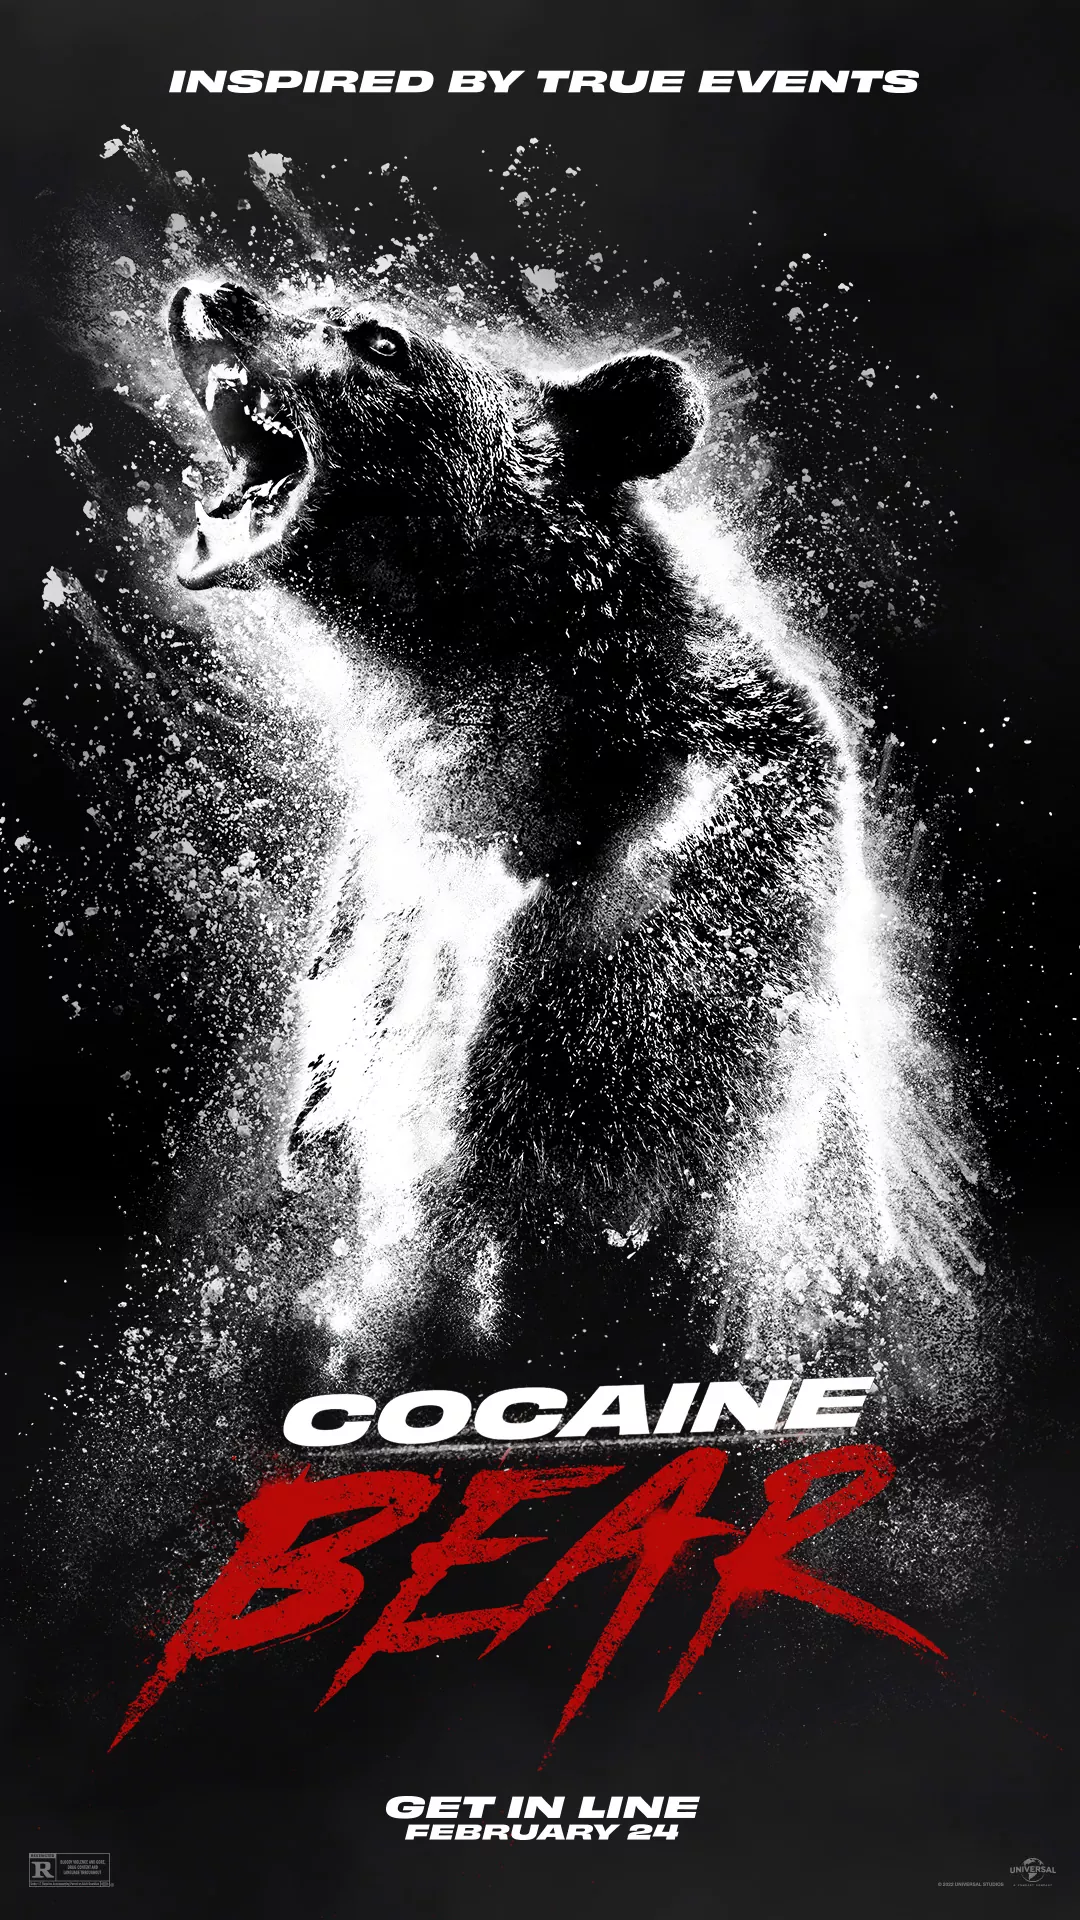 Trailer Από Το Κωμικό Θρίλερ "Cocaine Bear"